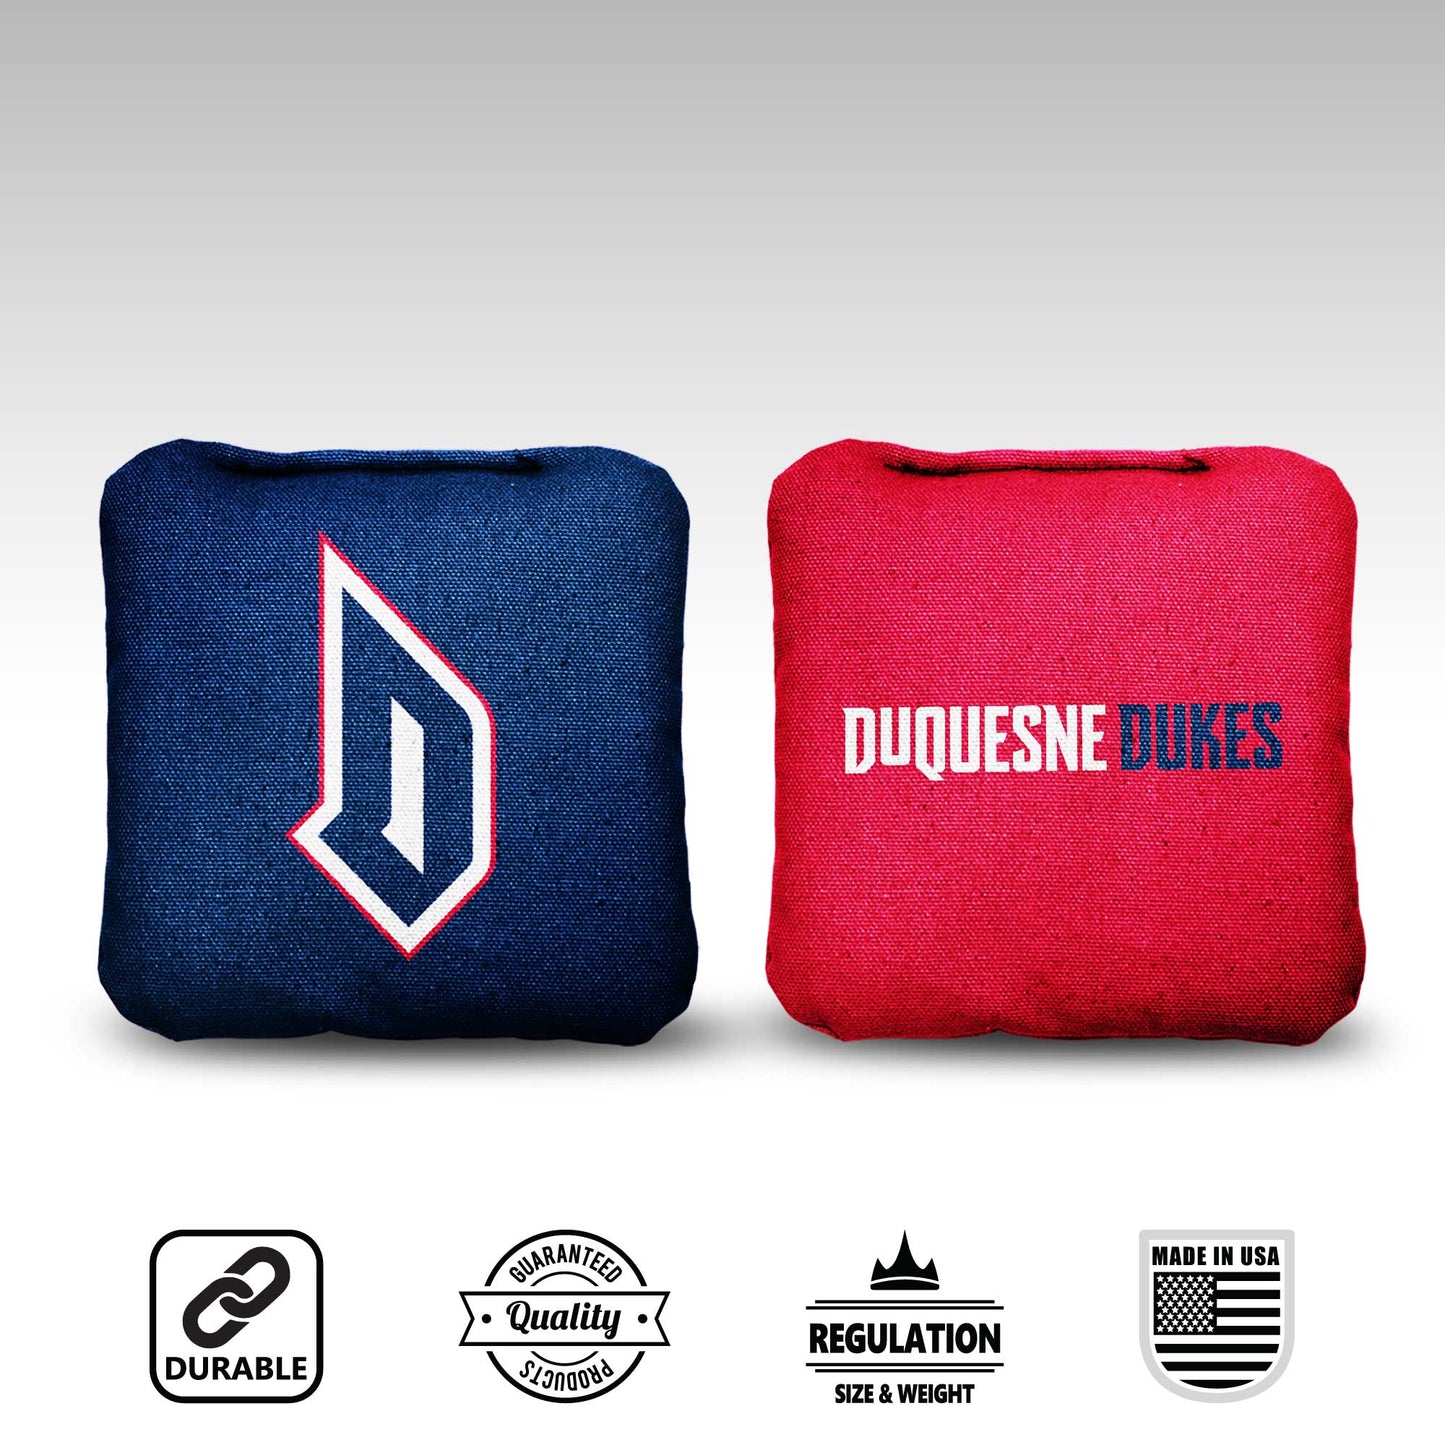 Duquesne University Cornhole Bags - 8 Cornhole Bags